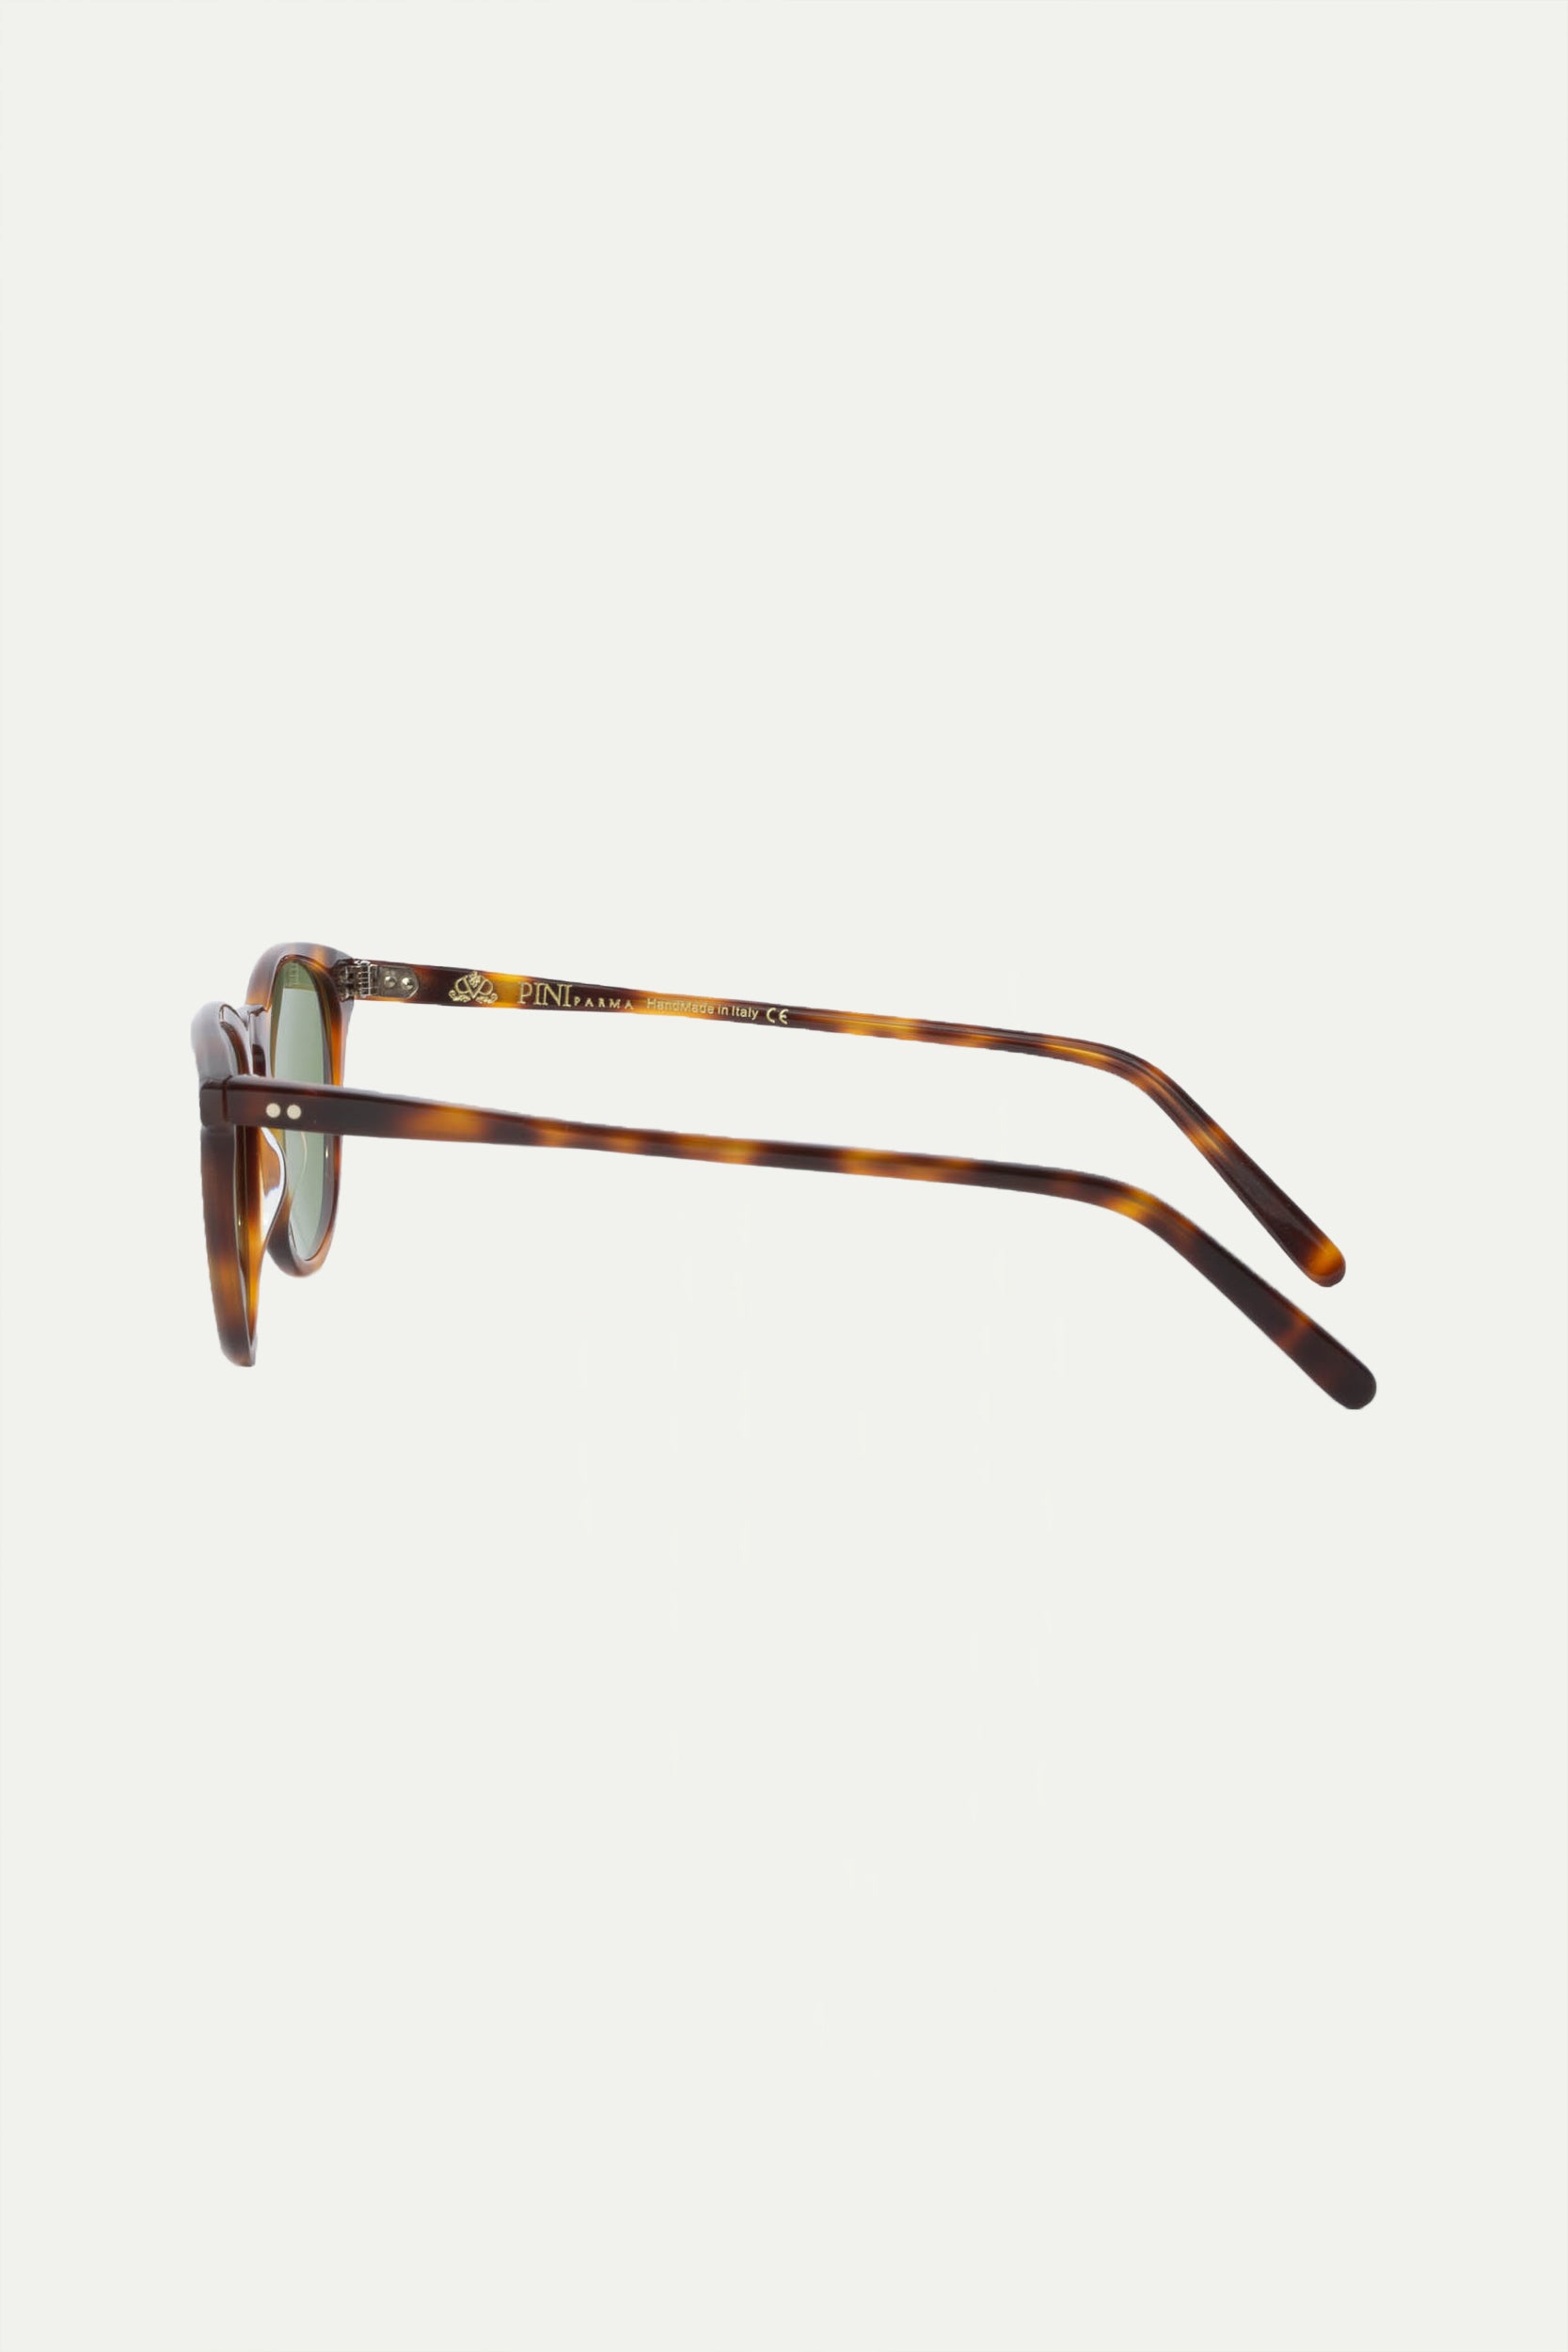 Turtle sunglasses Capri - Made in Italy